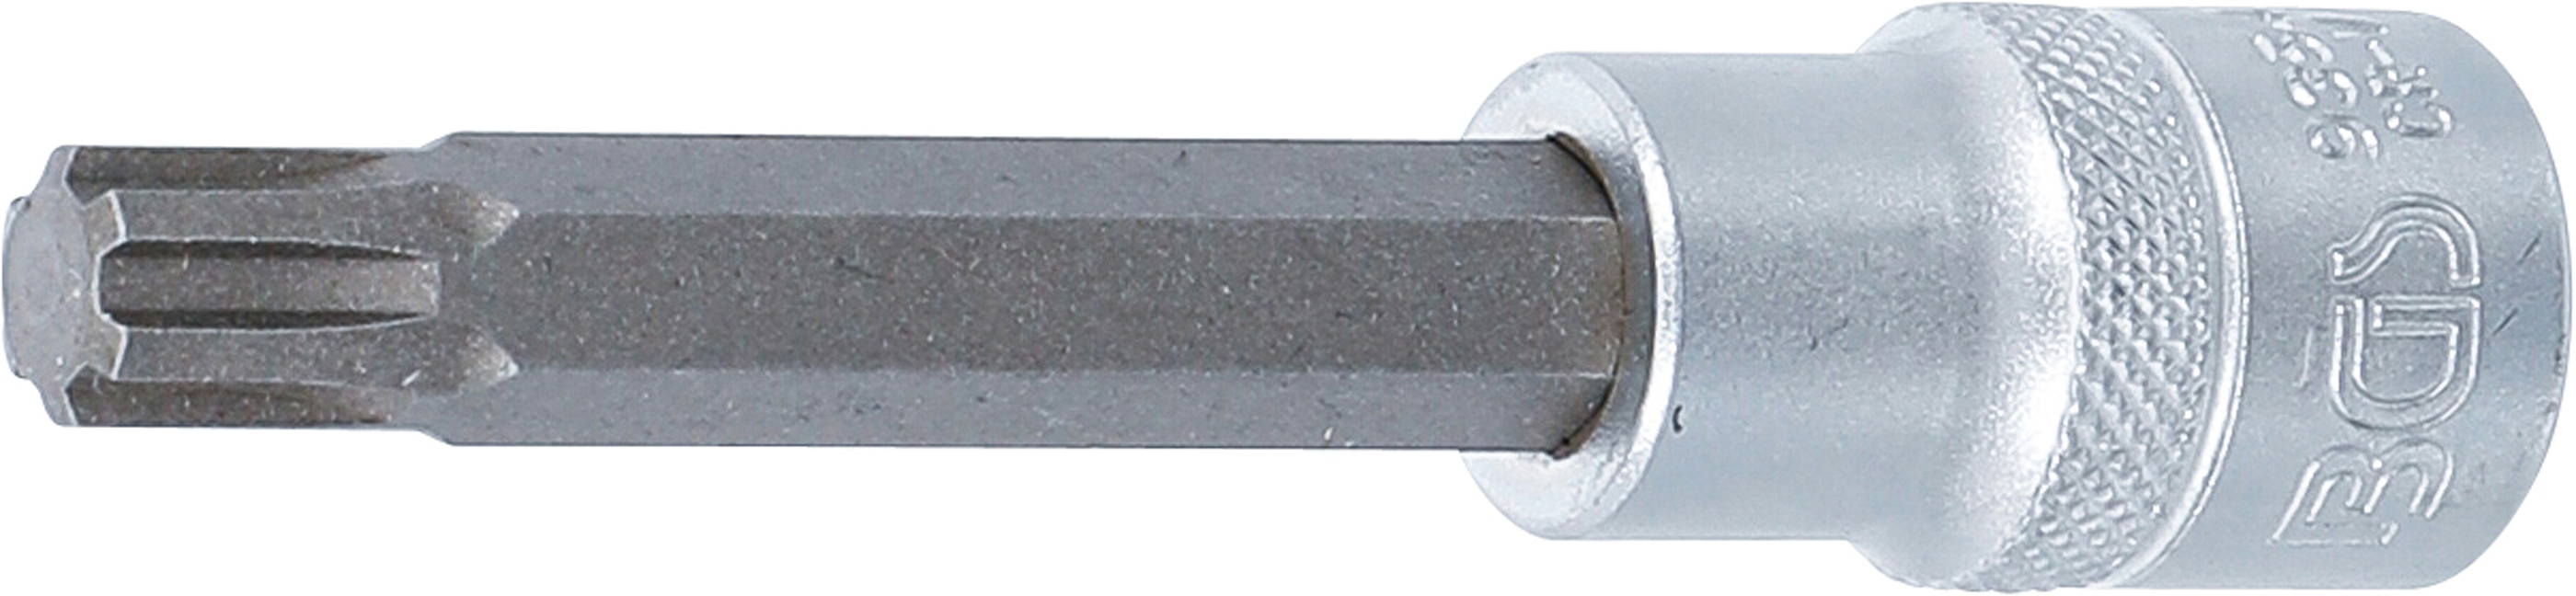 Bit-Einsatz | Länge 100 mm | Antrieb Innenvierkant 12,5 mm (1/2") | Keil-Profil (für Ribe) M10,3